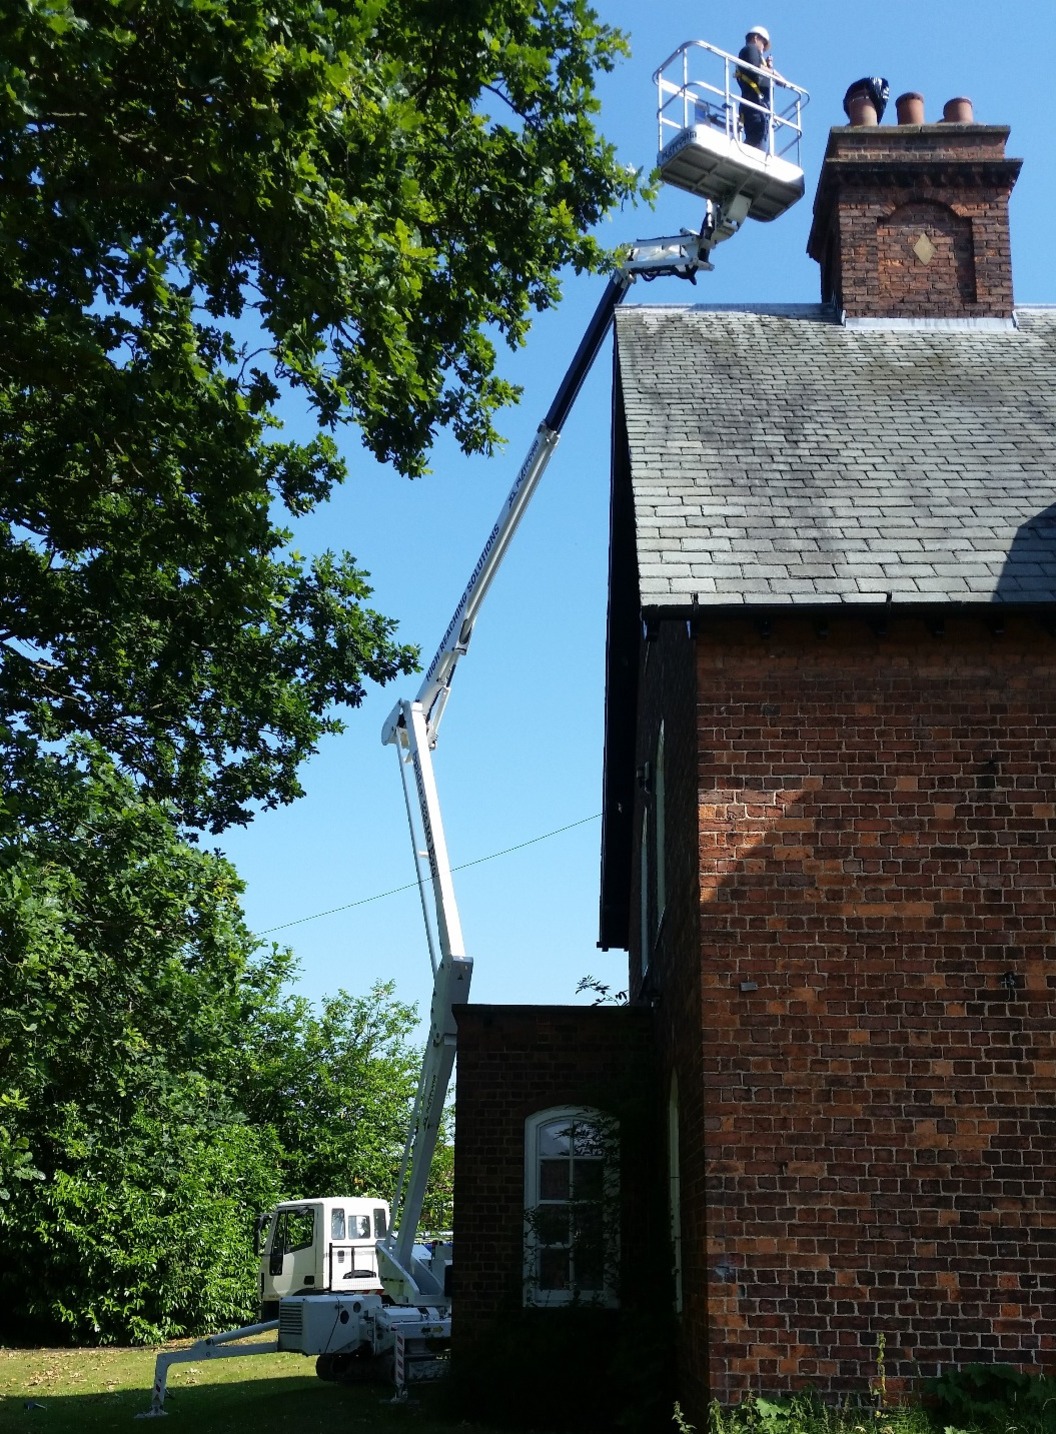 Tracked spider cherrypicker chimney maintenance